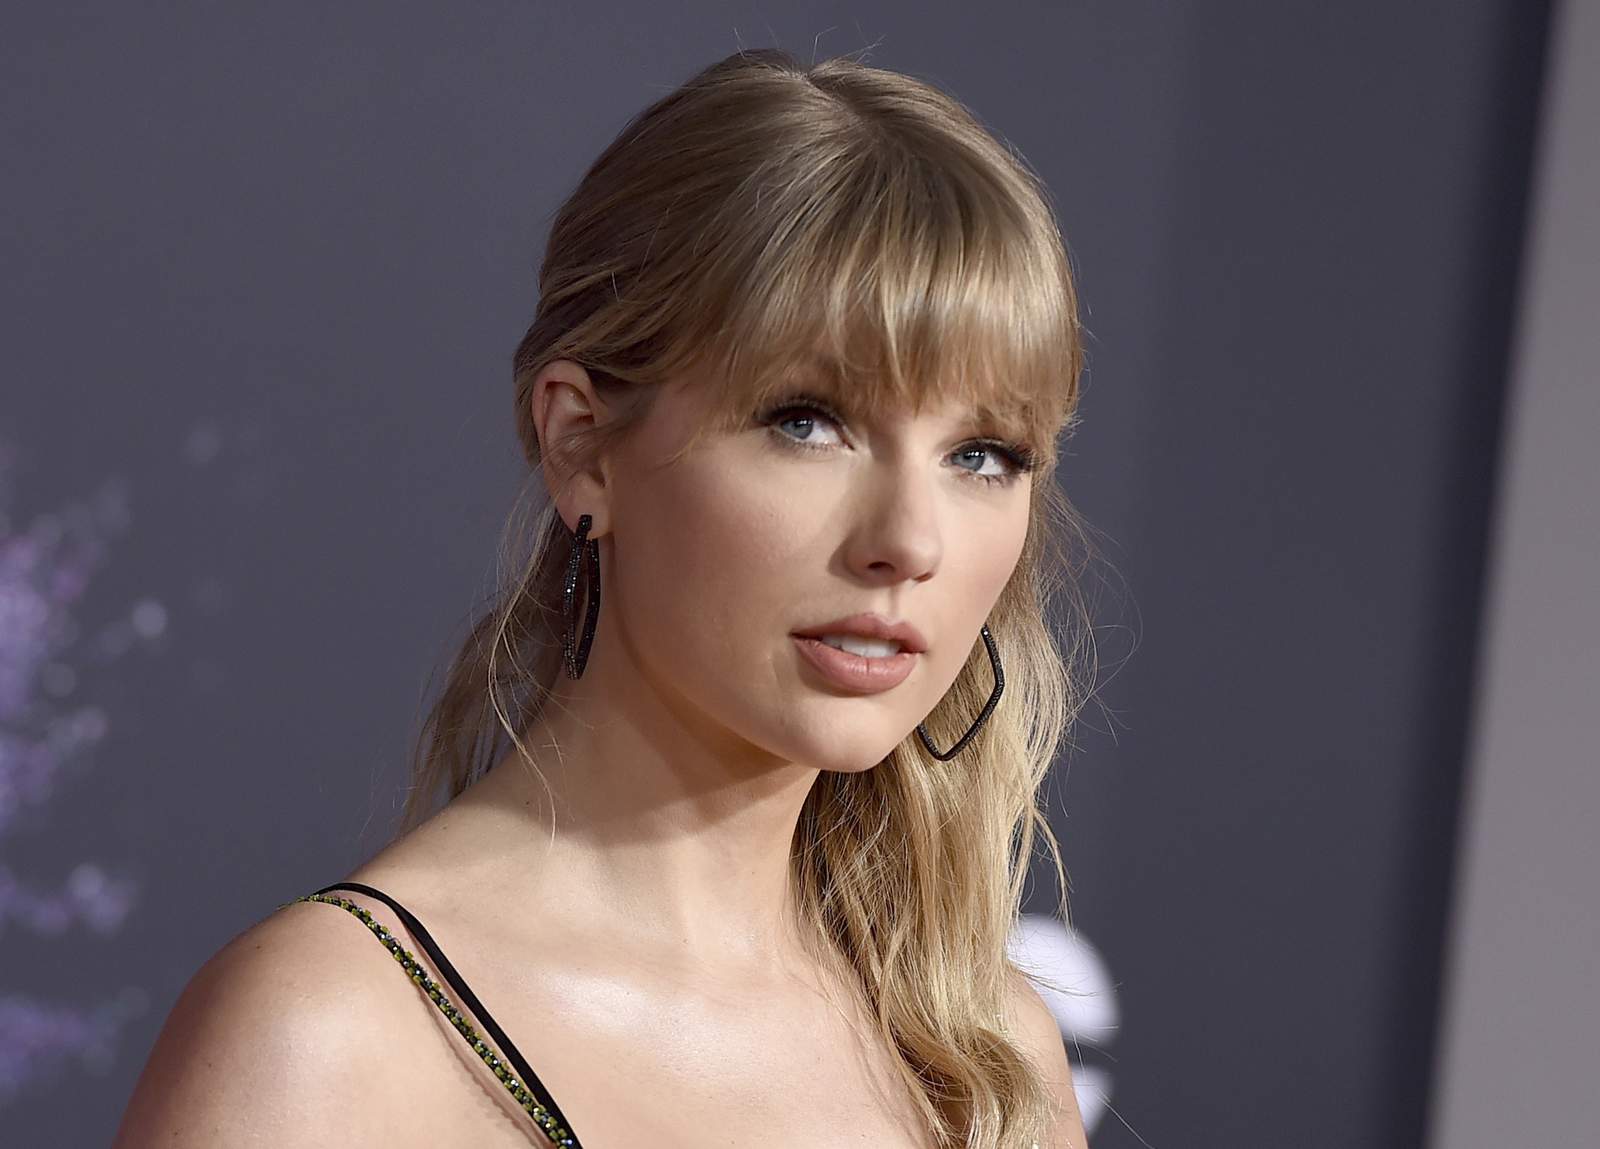 Stalker arrested at Taylor Swift’s New York building, police say